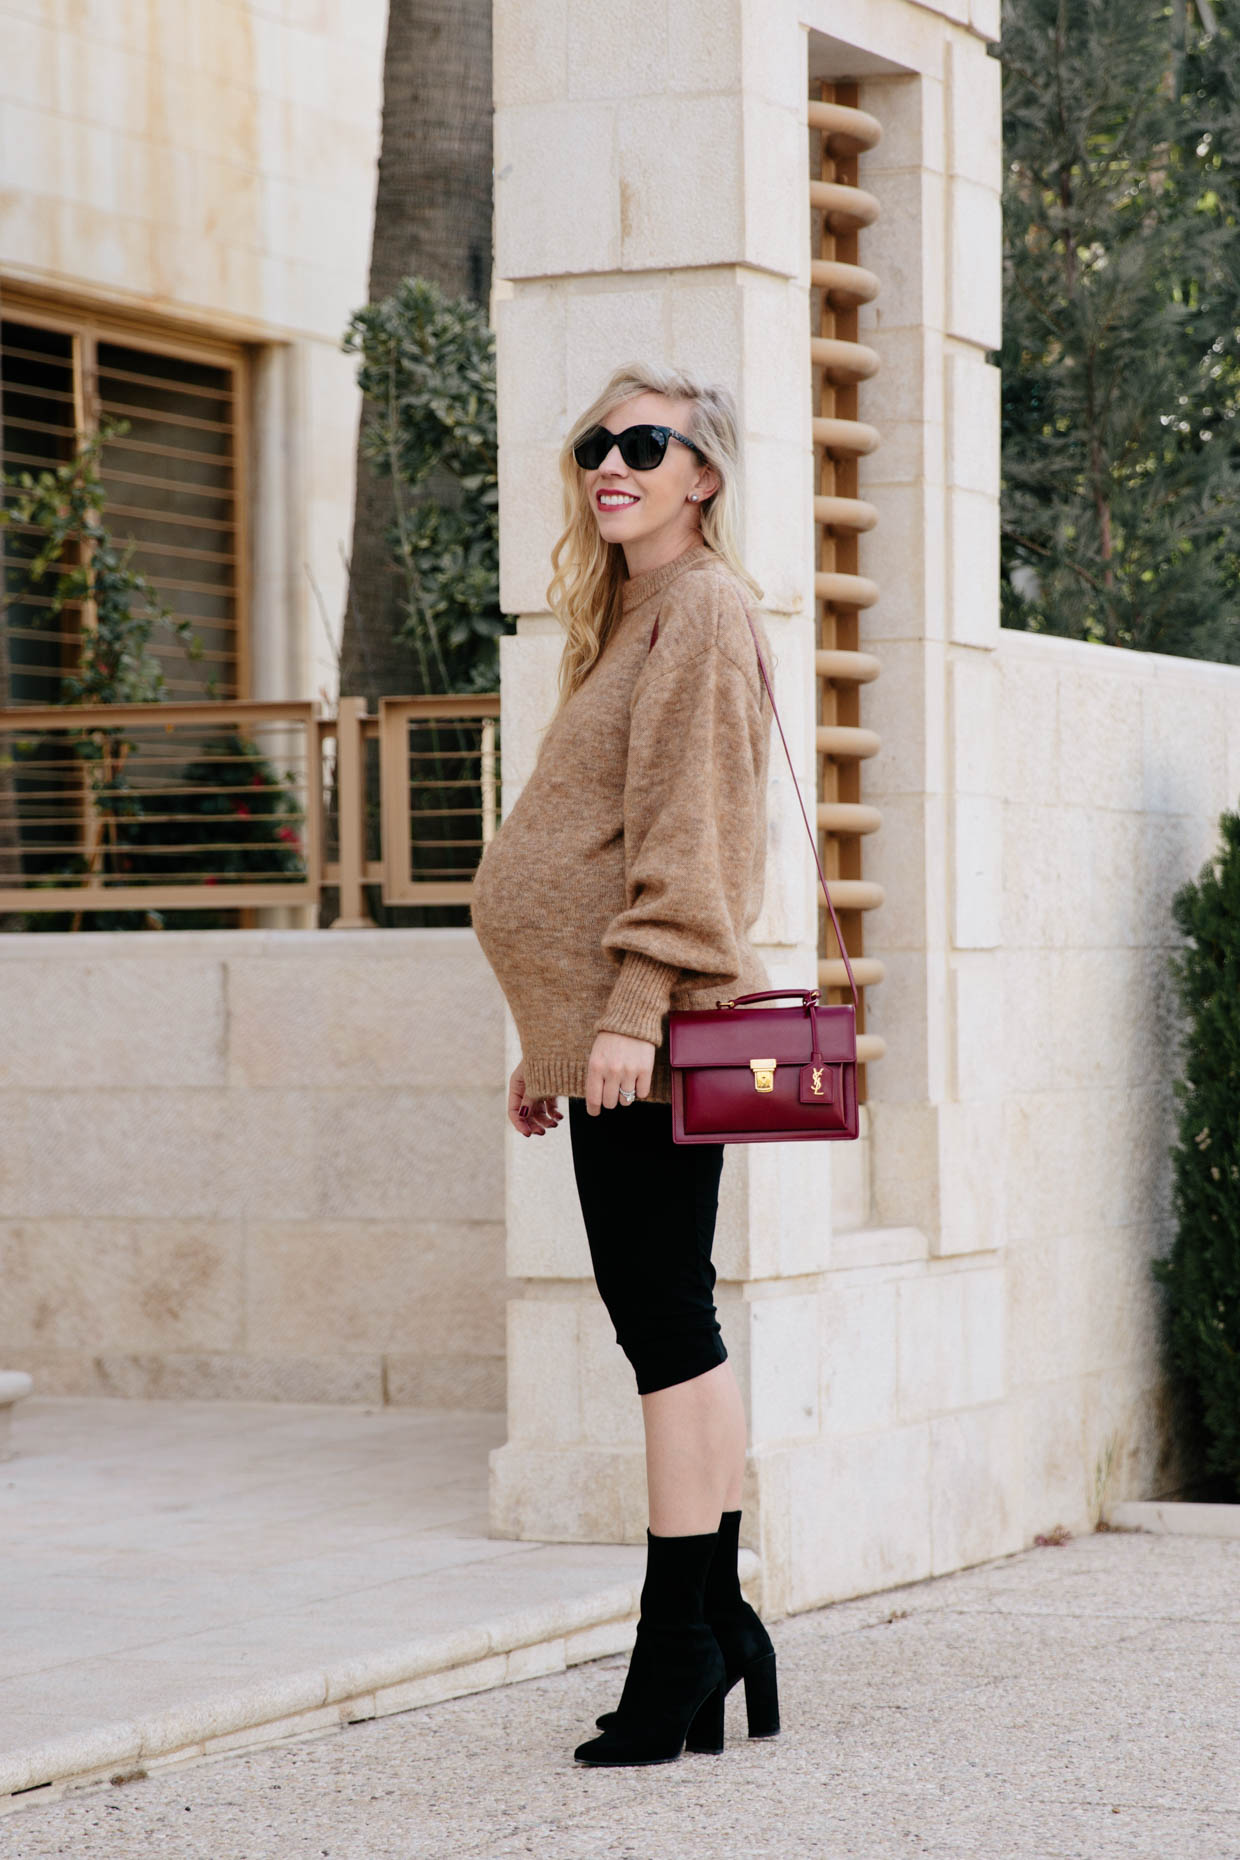 Meagan Brandon fashion blogger of Meagan's Moda styles oversized